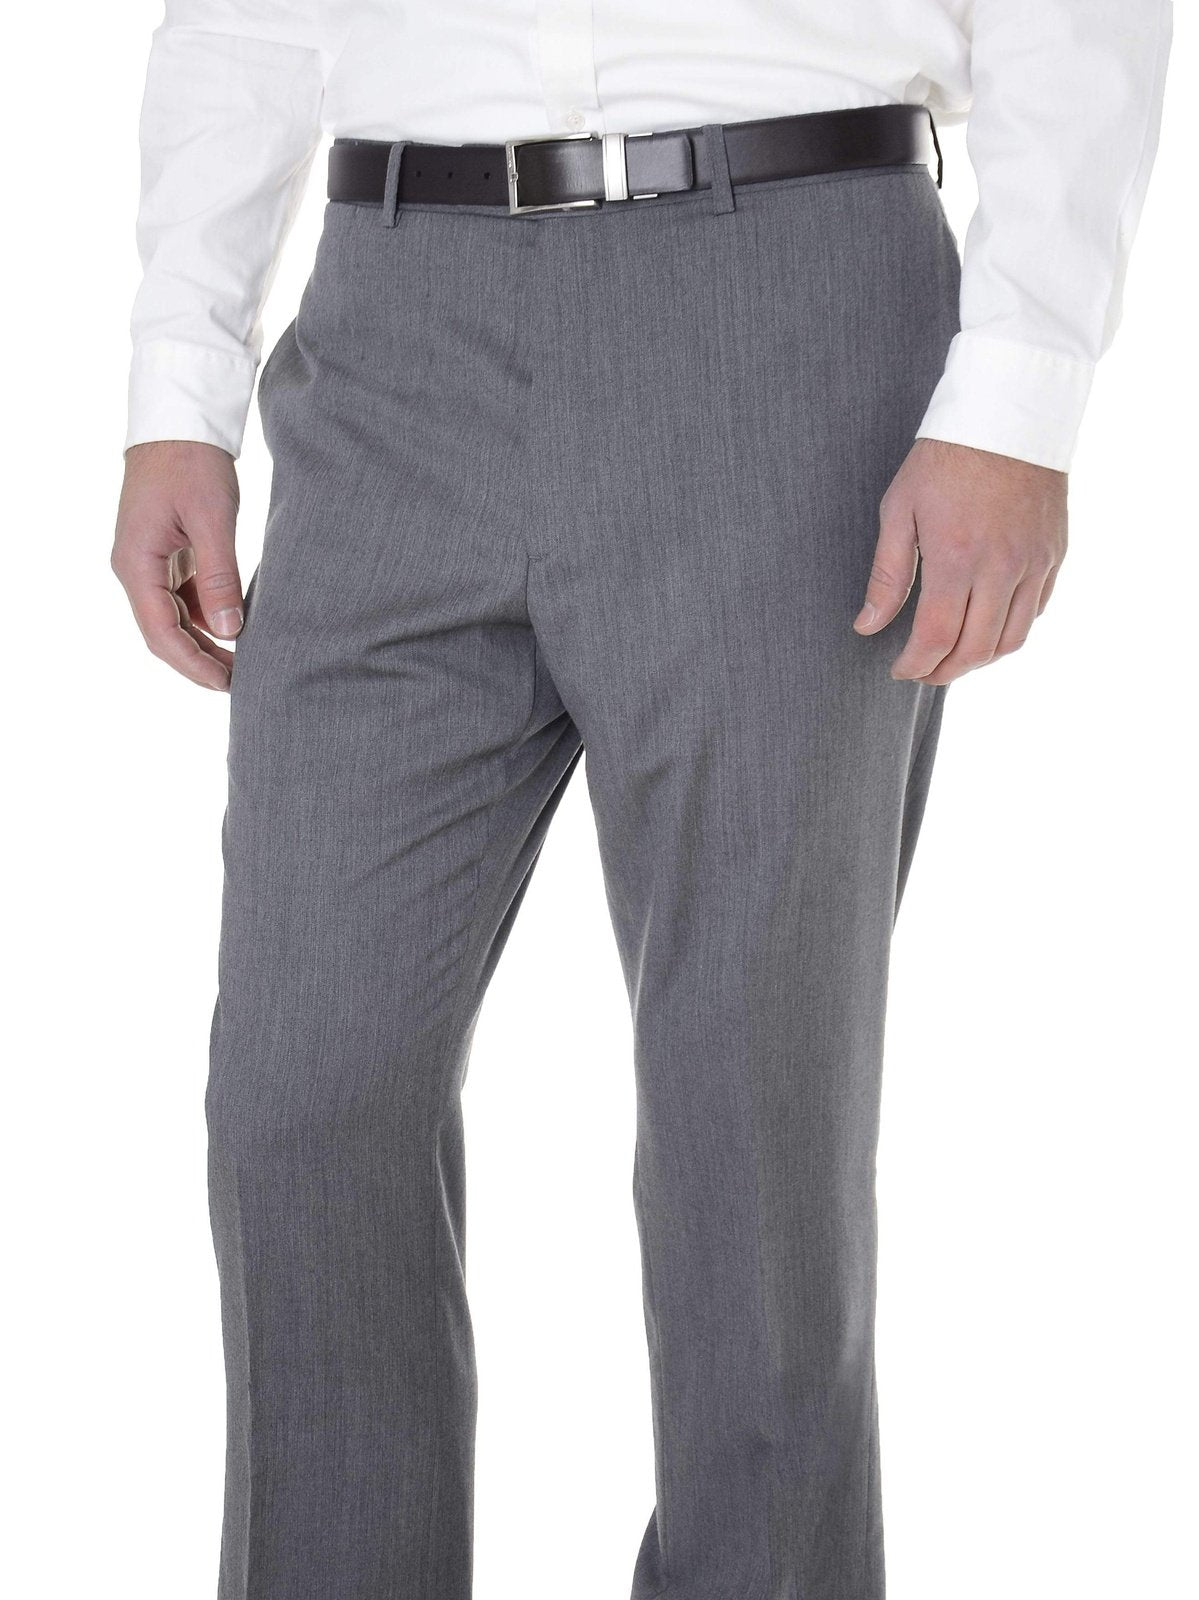 Buy Mazari Men's Gray 2382 Dress Pants | The Suit Depot